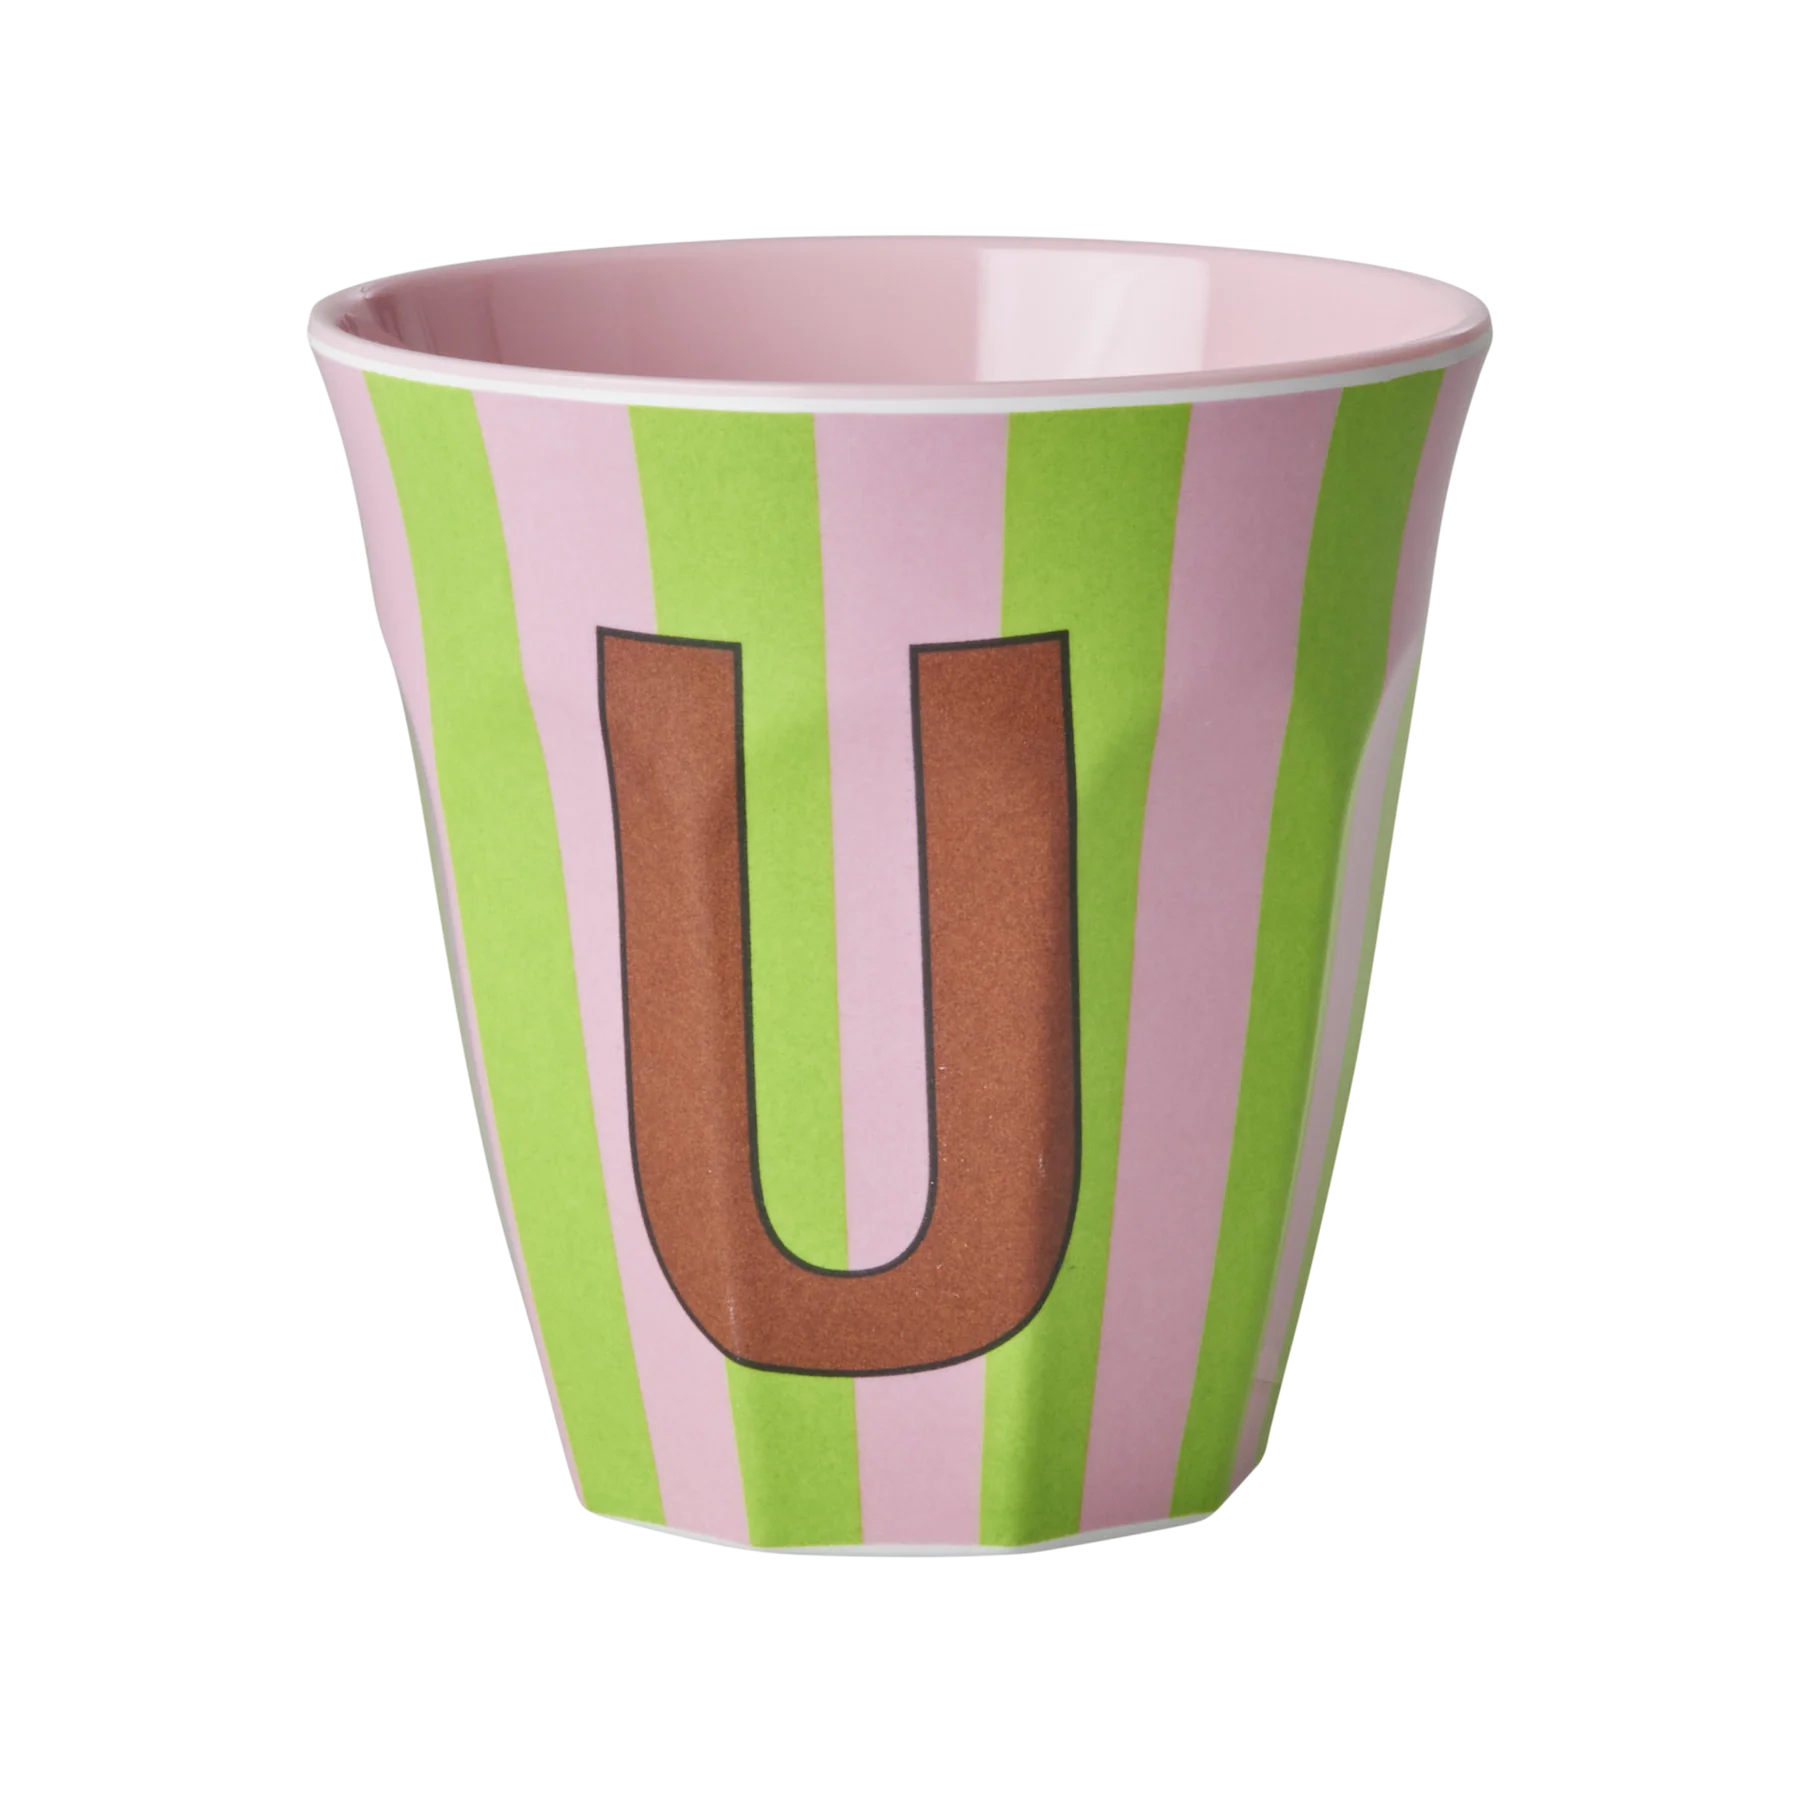 U Pink Stripe Melamine Cup - Rice DK